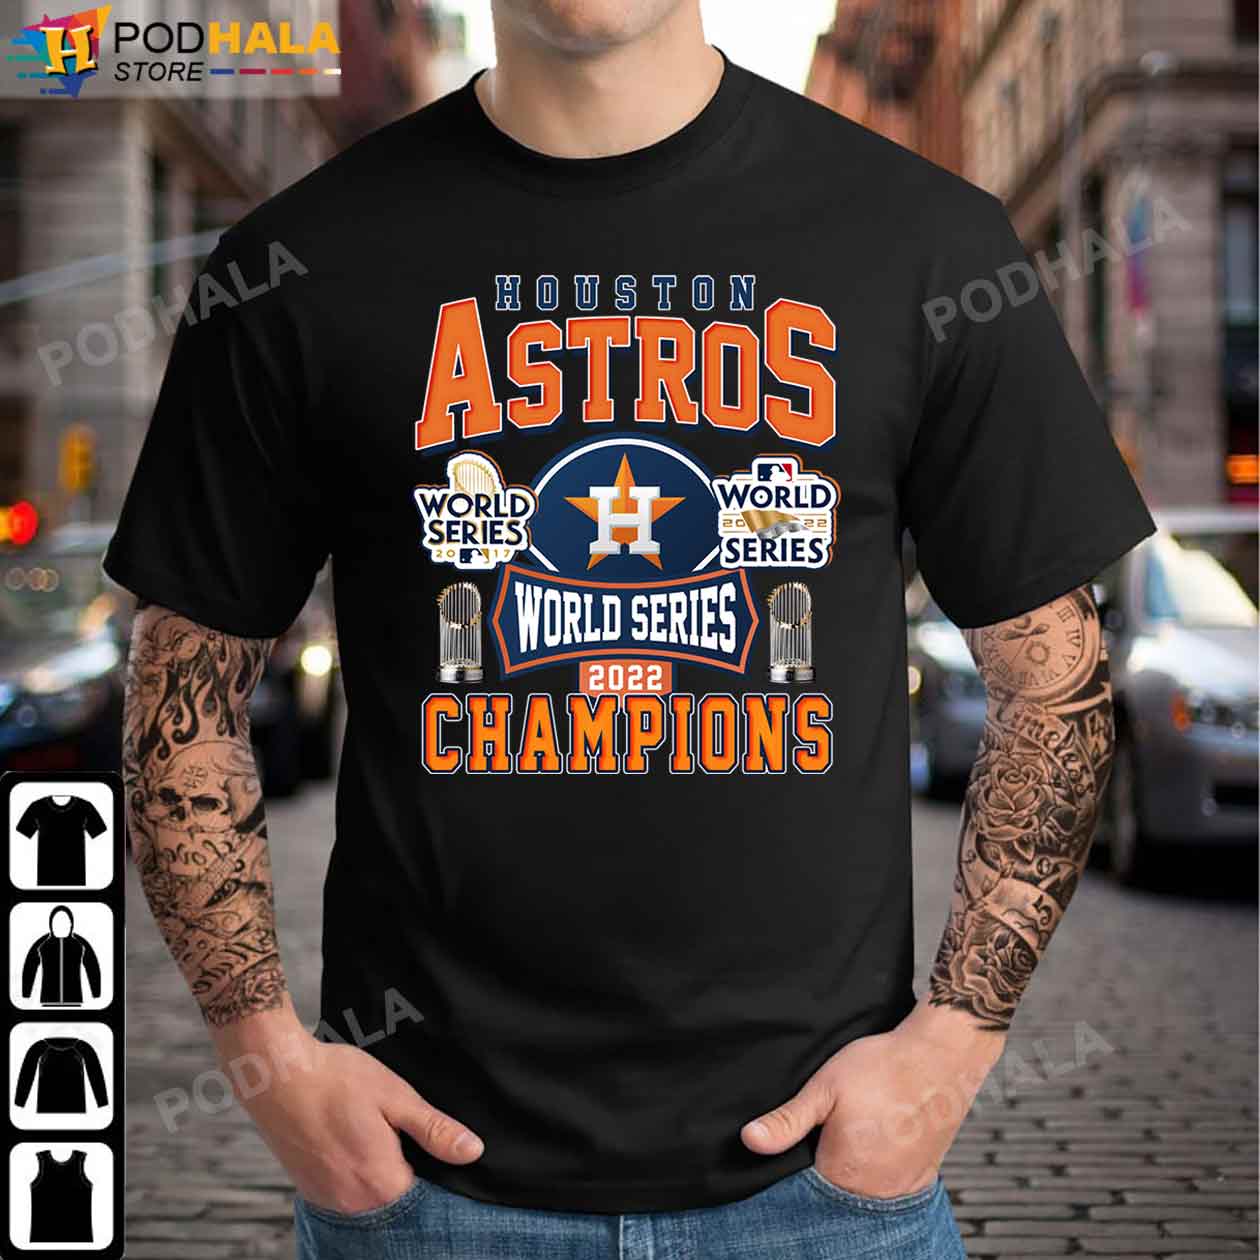 astros world series champions merchandise